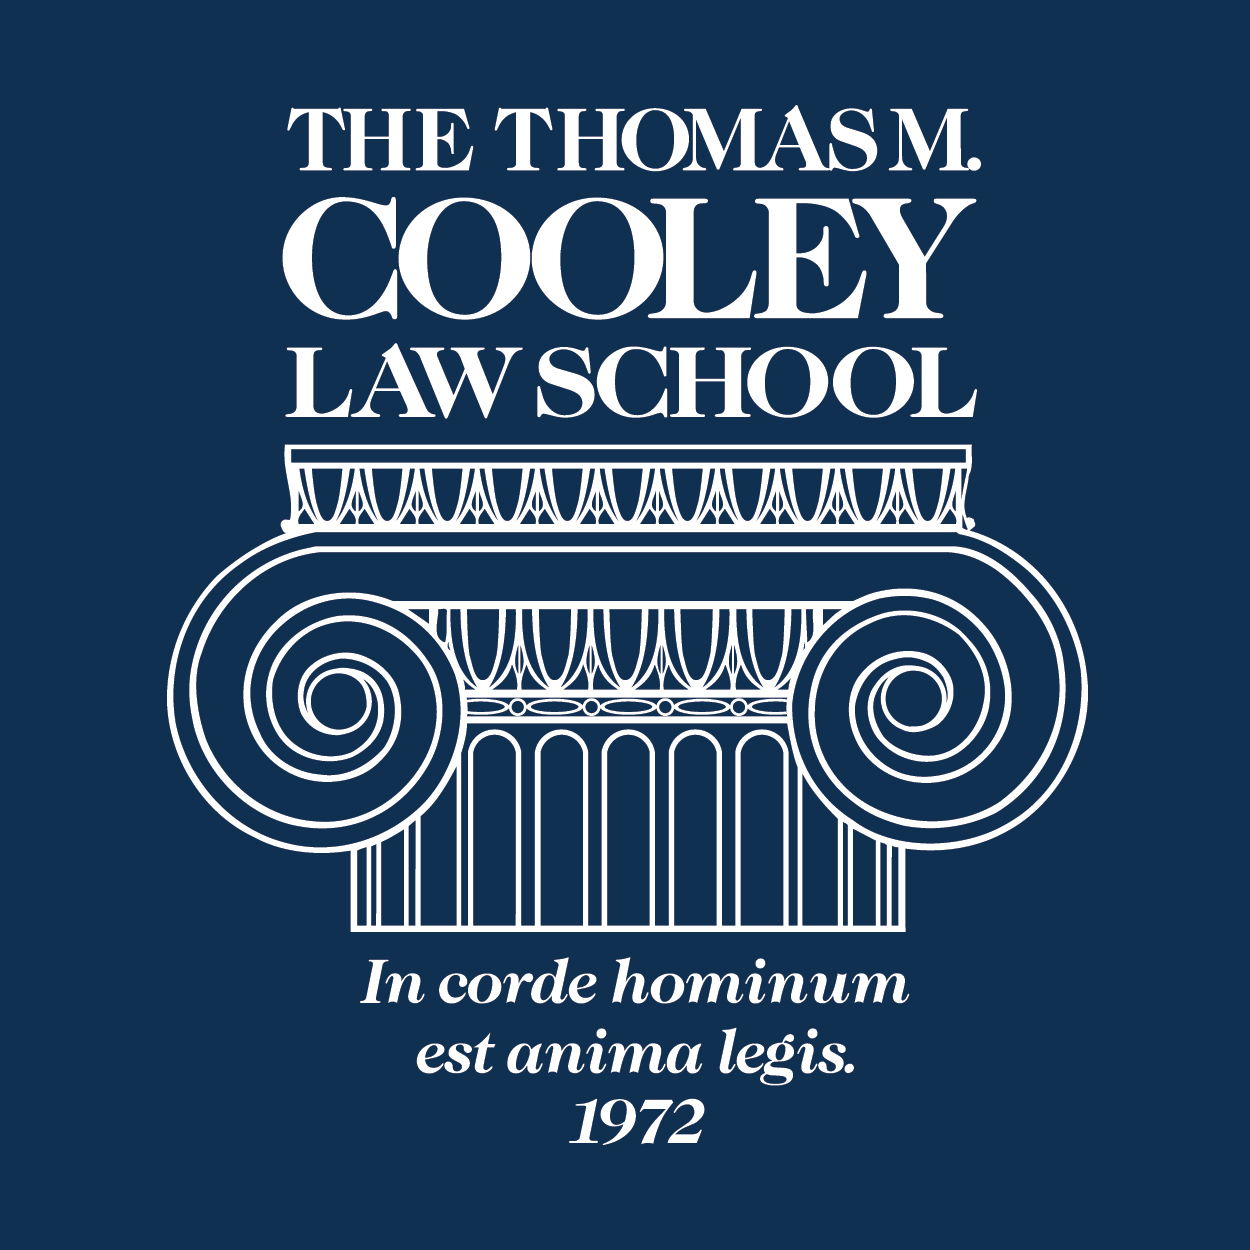 Cooley Law School logo